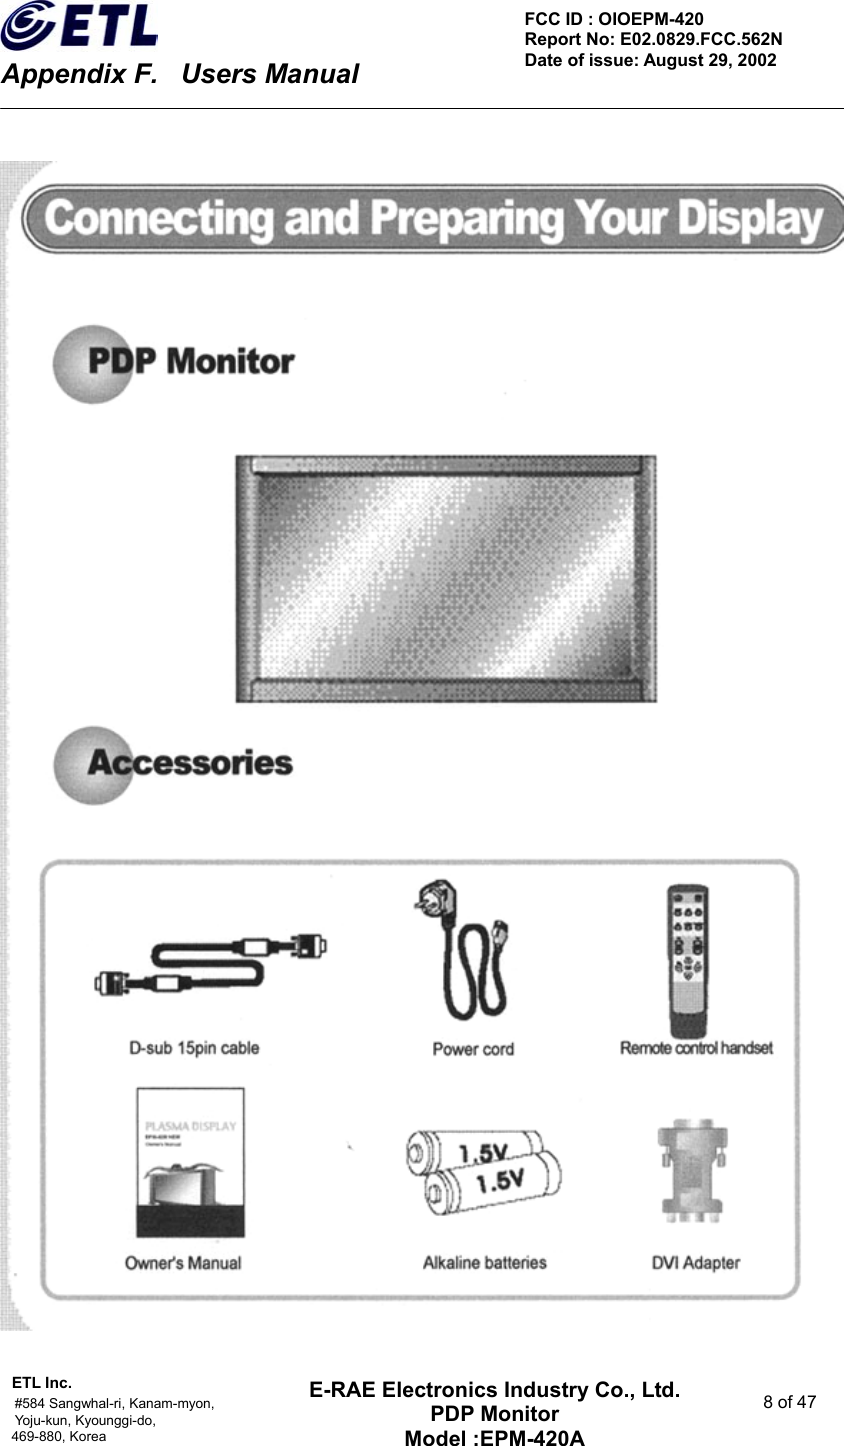    Appendix F.    Users Manual ETL Inc.                                                                                    #584 Sangwhal-ri, Kanam-myon,  8 of 47 Yoju-kun, Kyounggi-do,  469-880, Korea     FCC ID : OIOEPM-420   Report No: E02.0829.FCC.562N   Date of issue: August 29, 2002 E-RAE Electronics Industry Co., Ltd. PDP Monitor Model :EPM-420A                                    